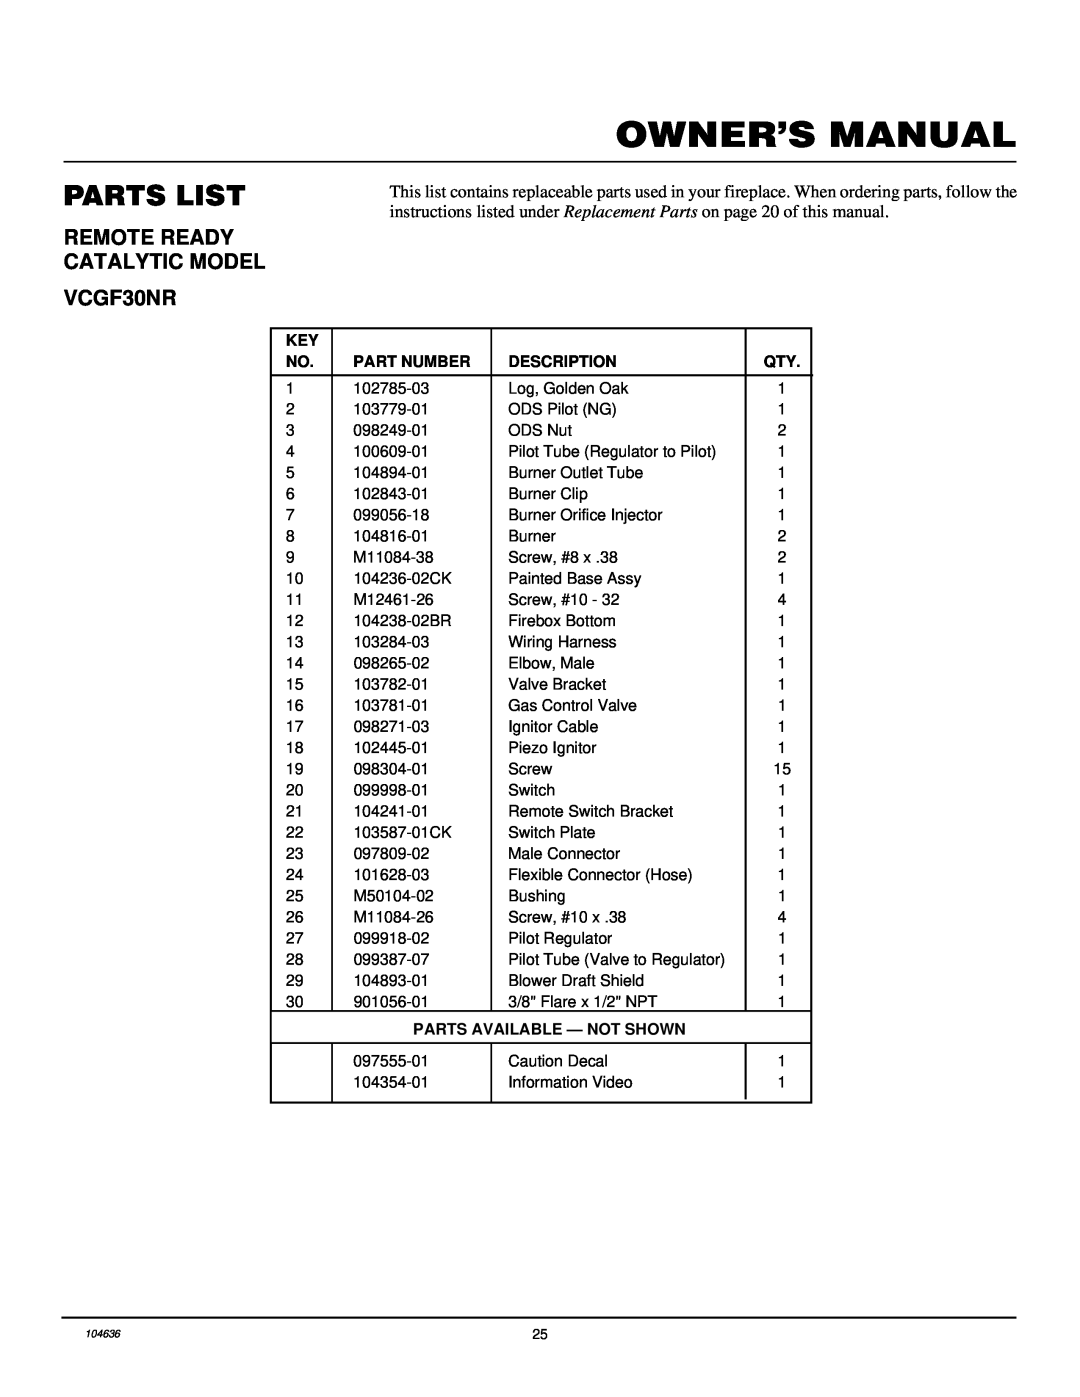 Desa installation manual Parts List, REMOTE READY CATALYTIC MODEL VCGF30NR 